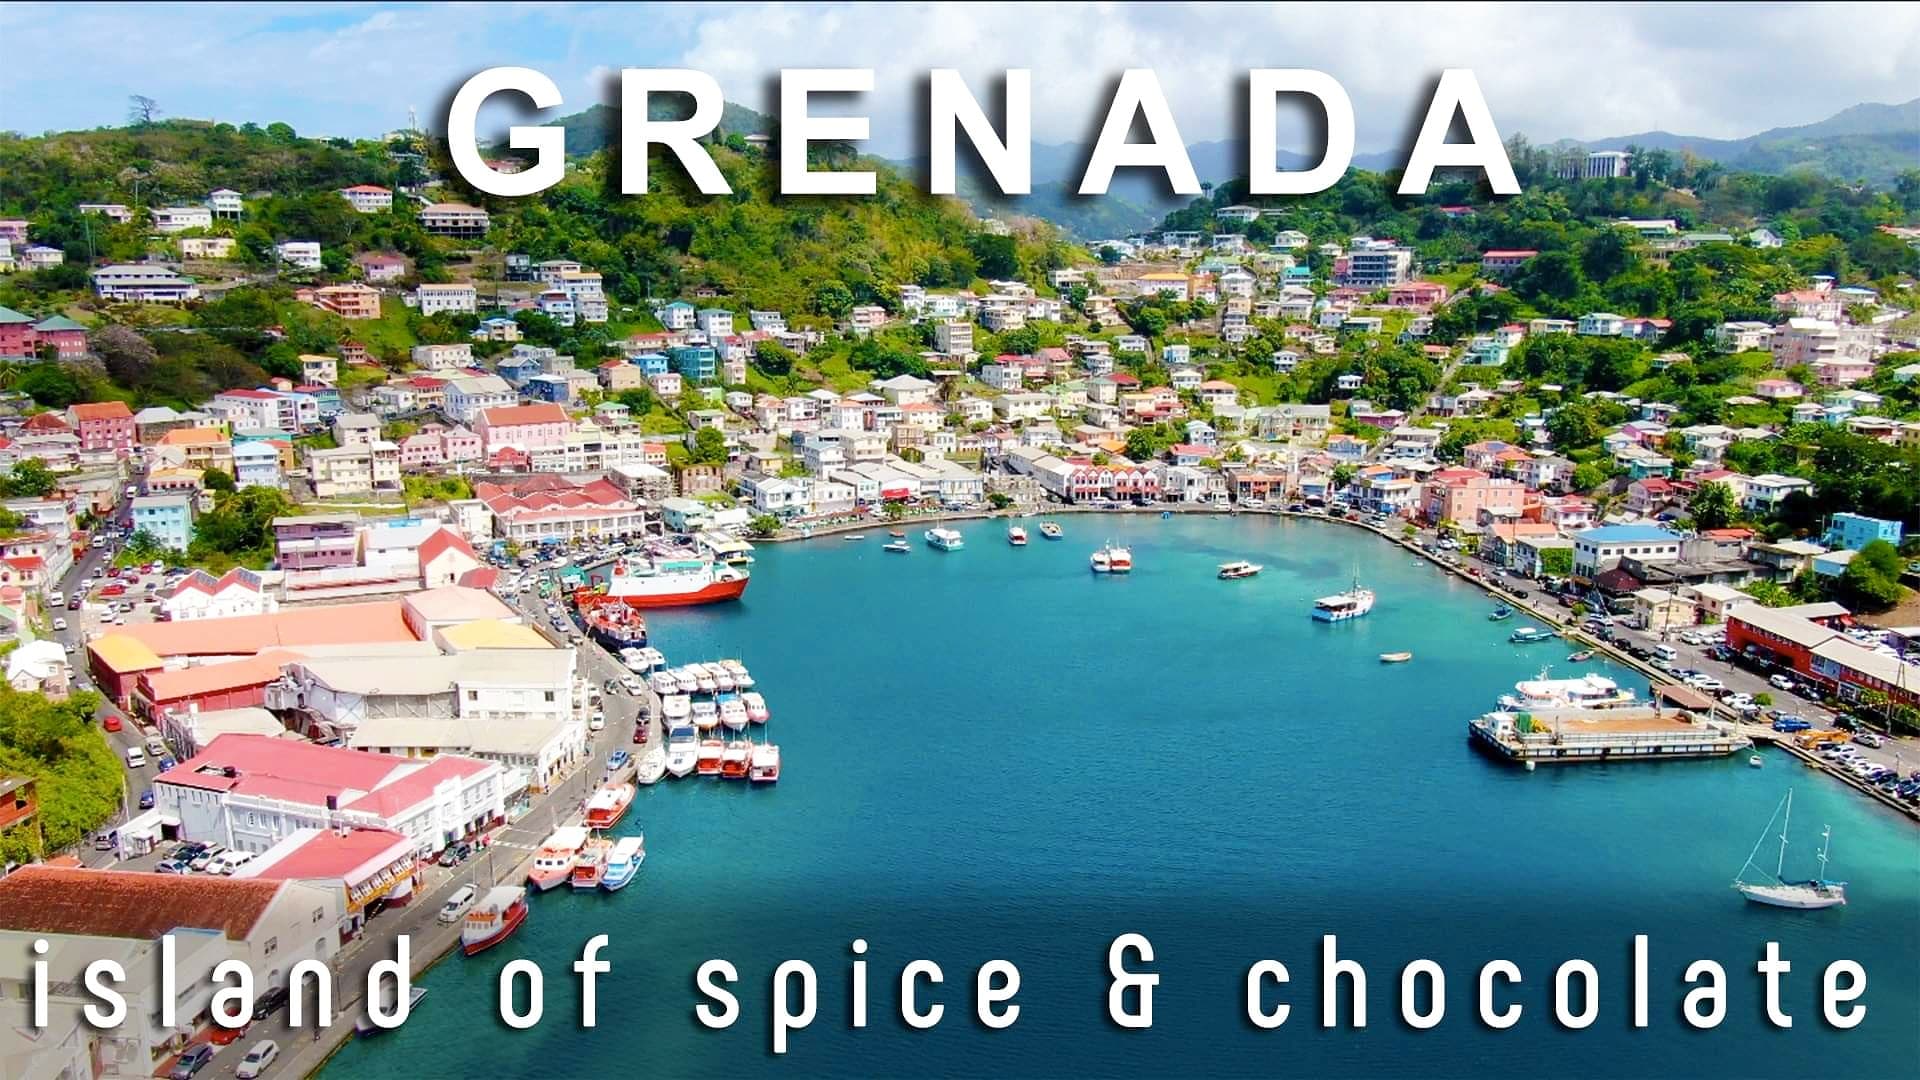 GRENADA ISLE OF SPICE 